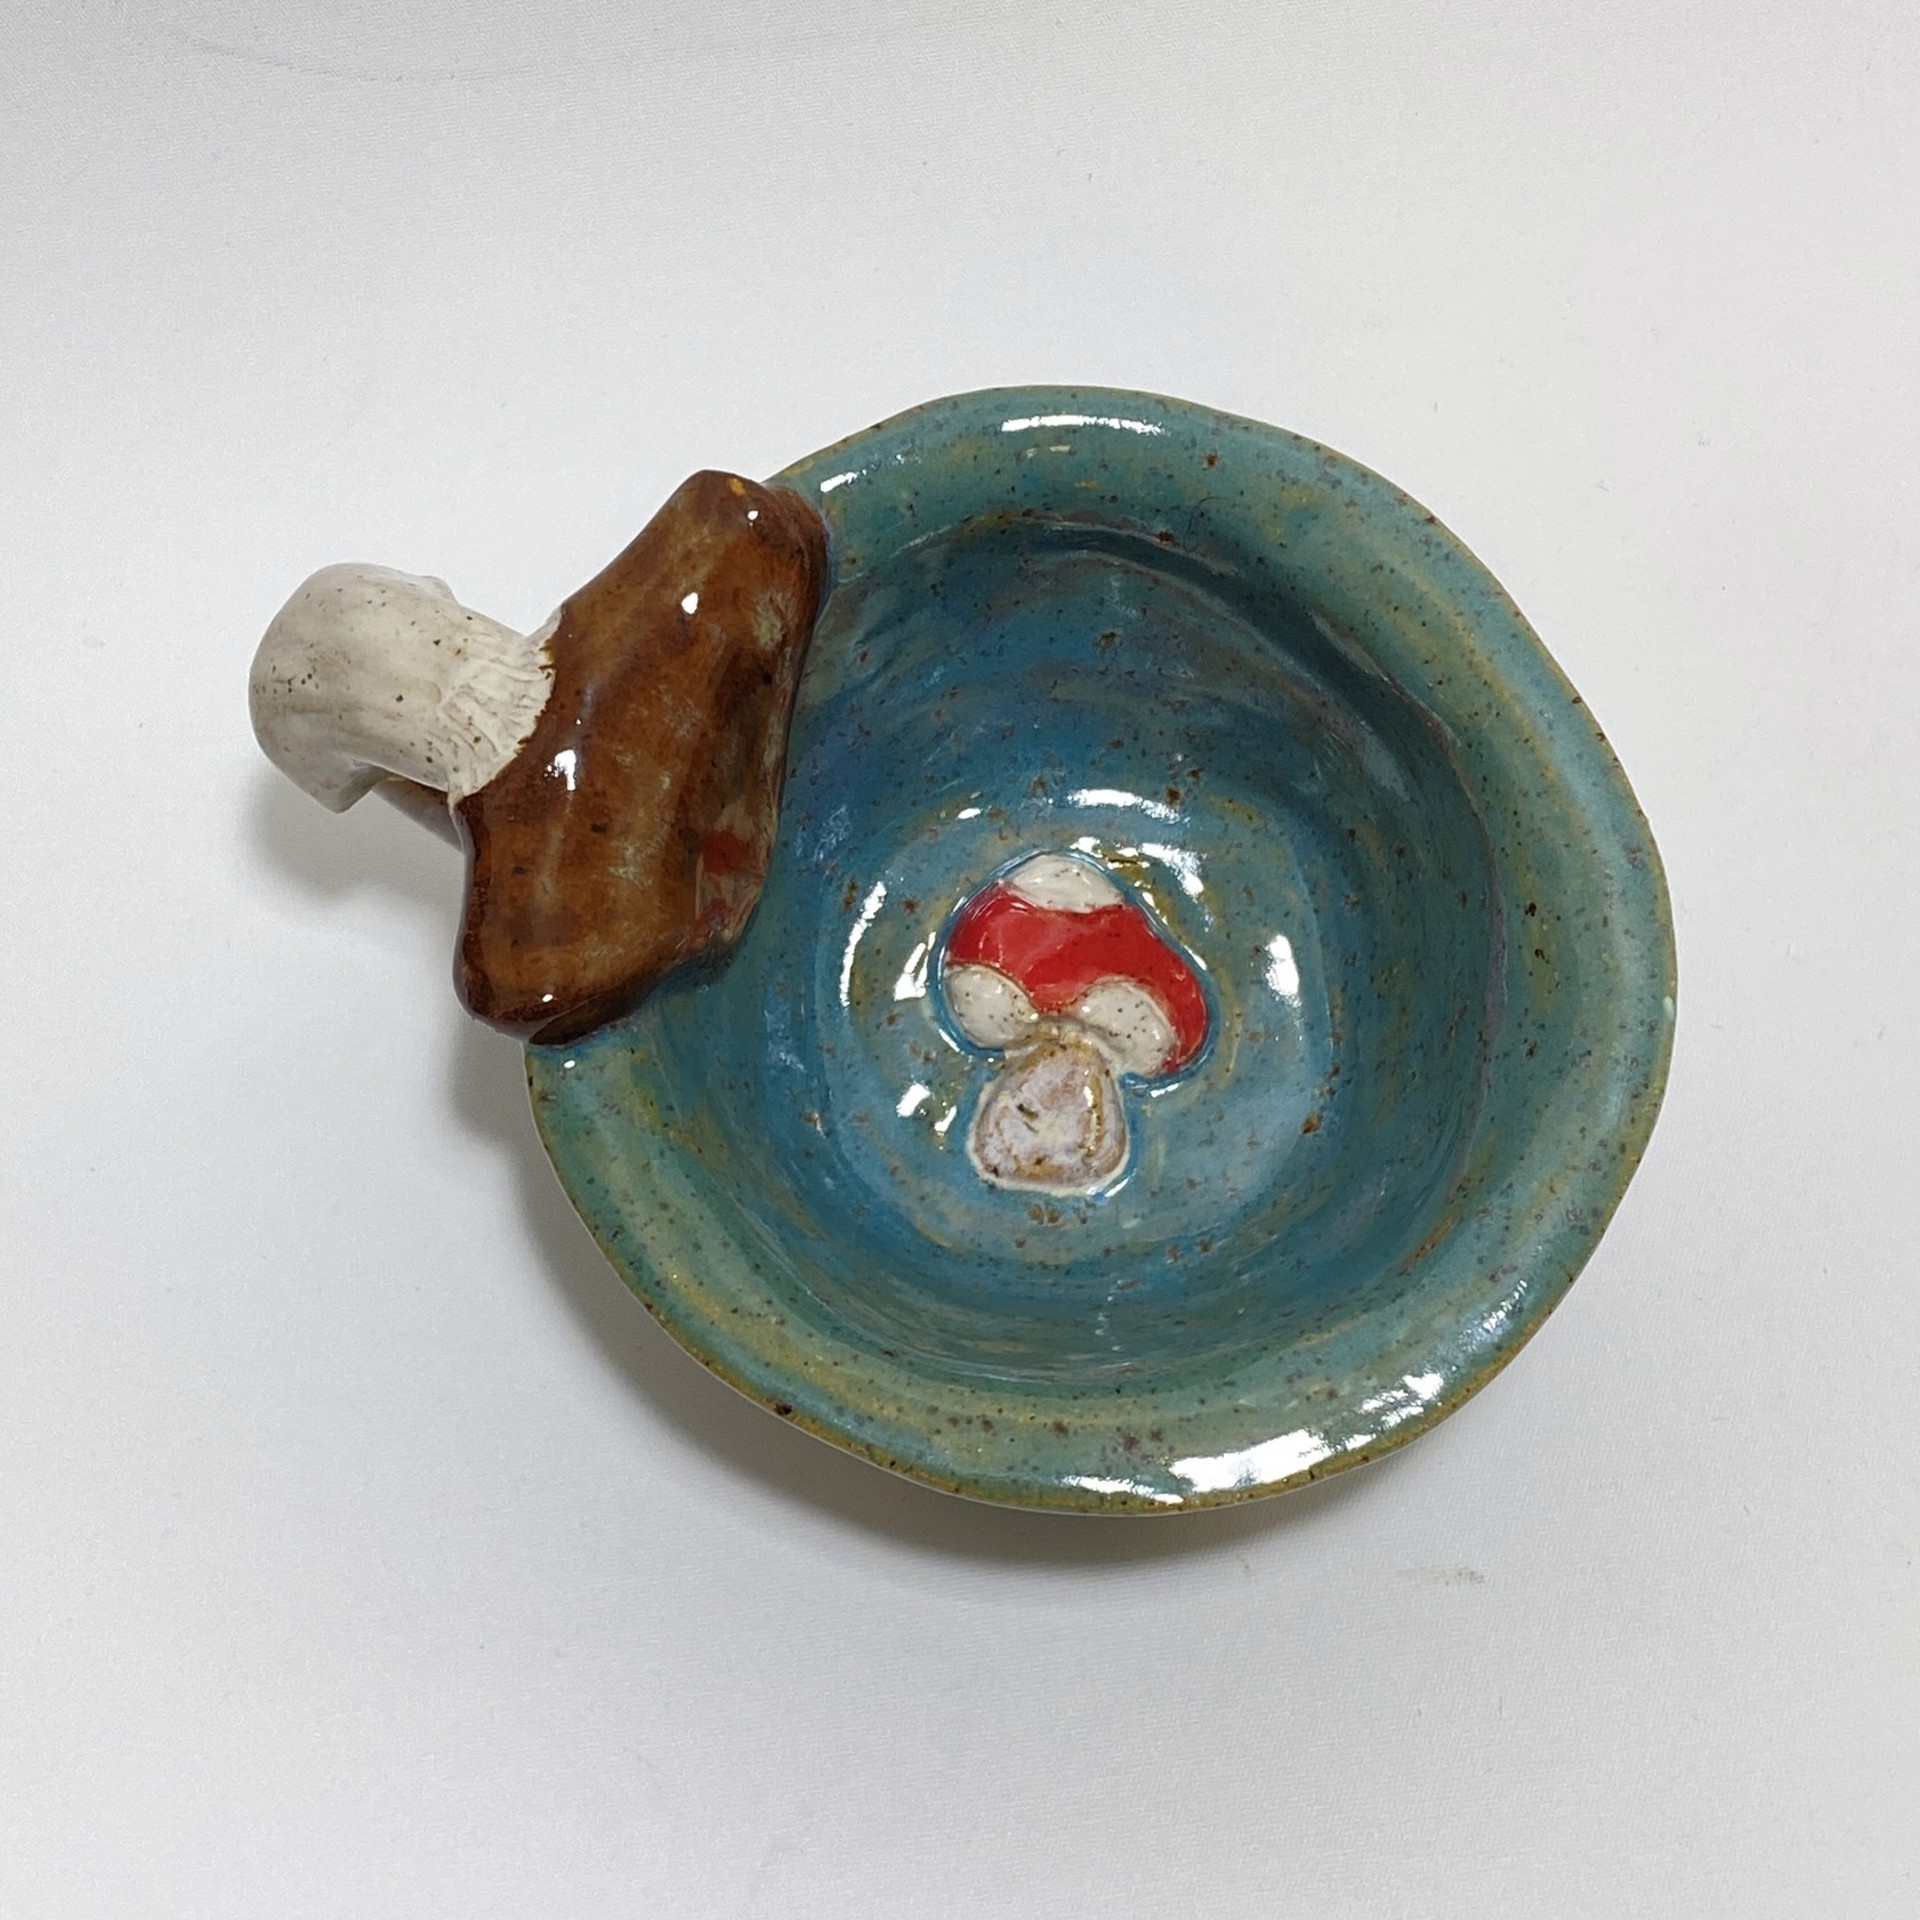 Mushroom Cup & Bowl by Kristy Bullock